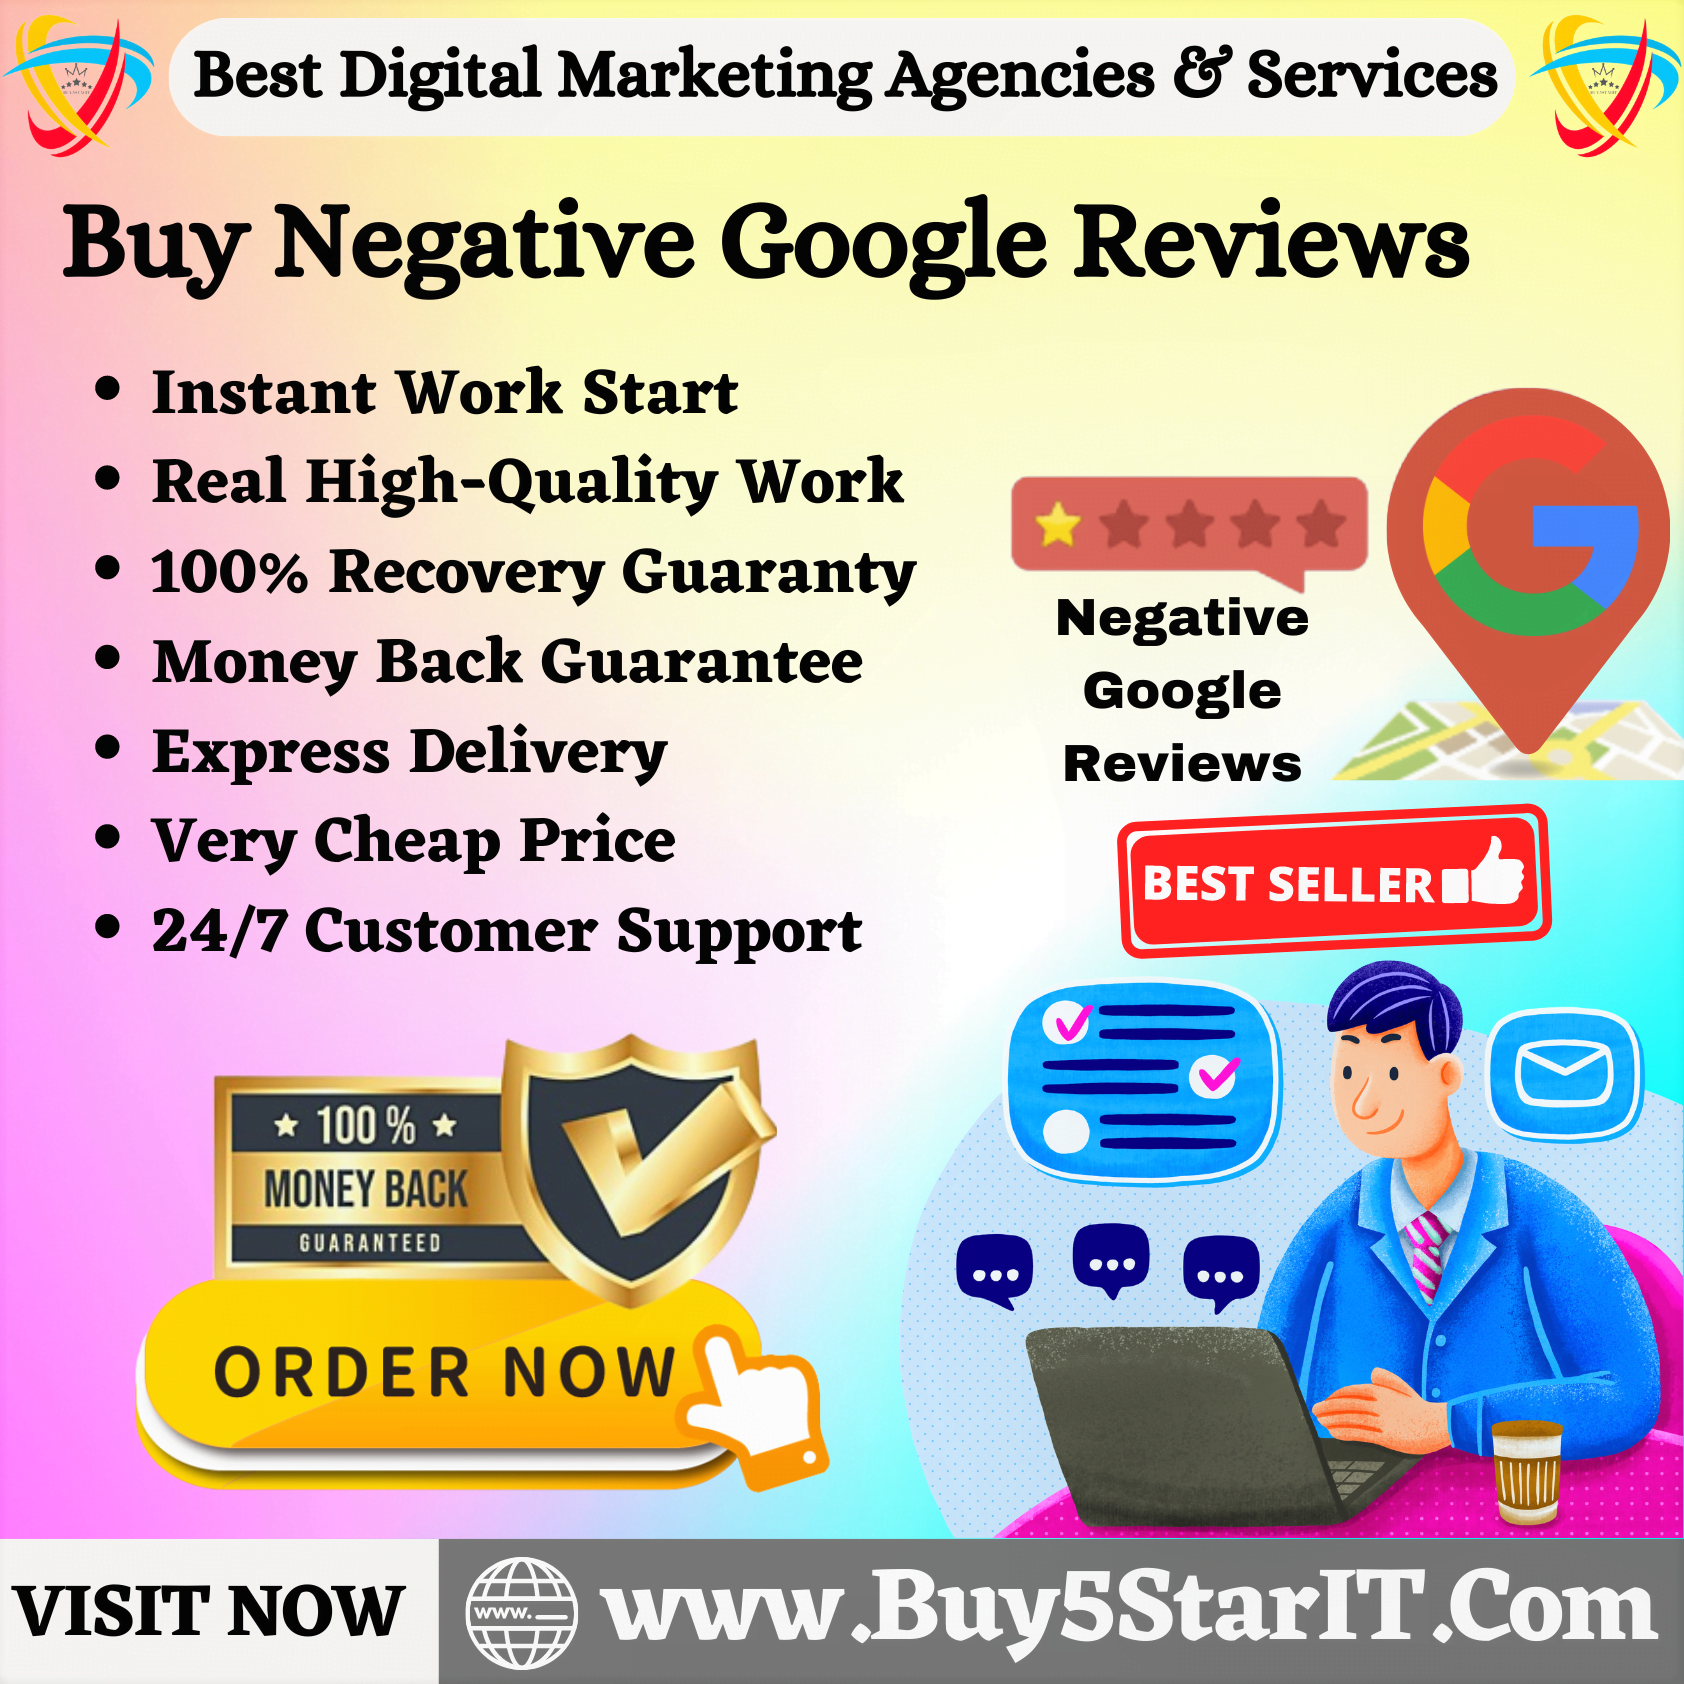 Buy Negative Google Reviews - 1 Star, Fake, Bad Google ...